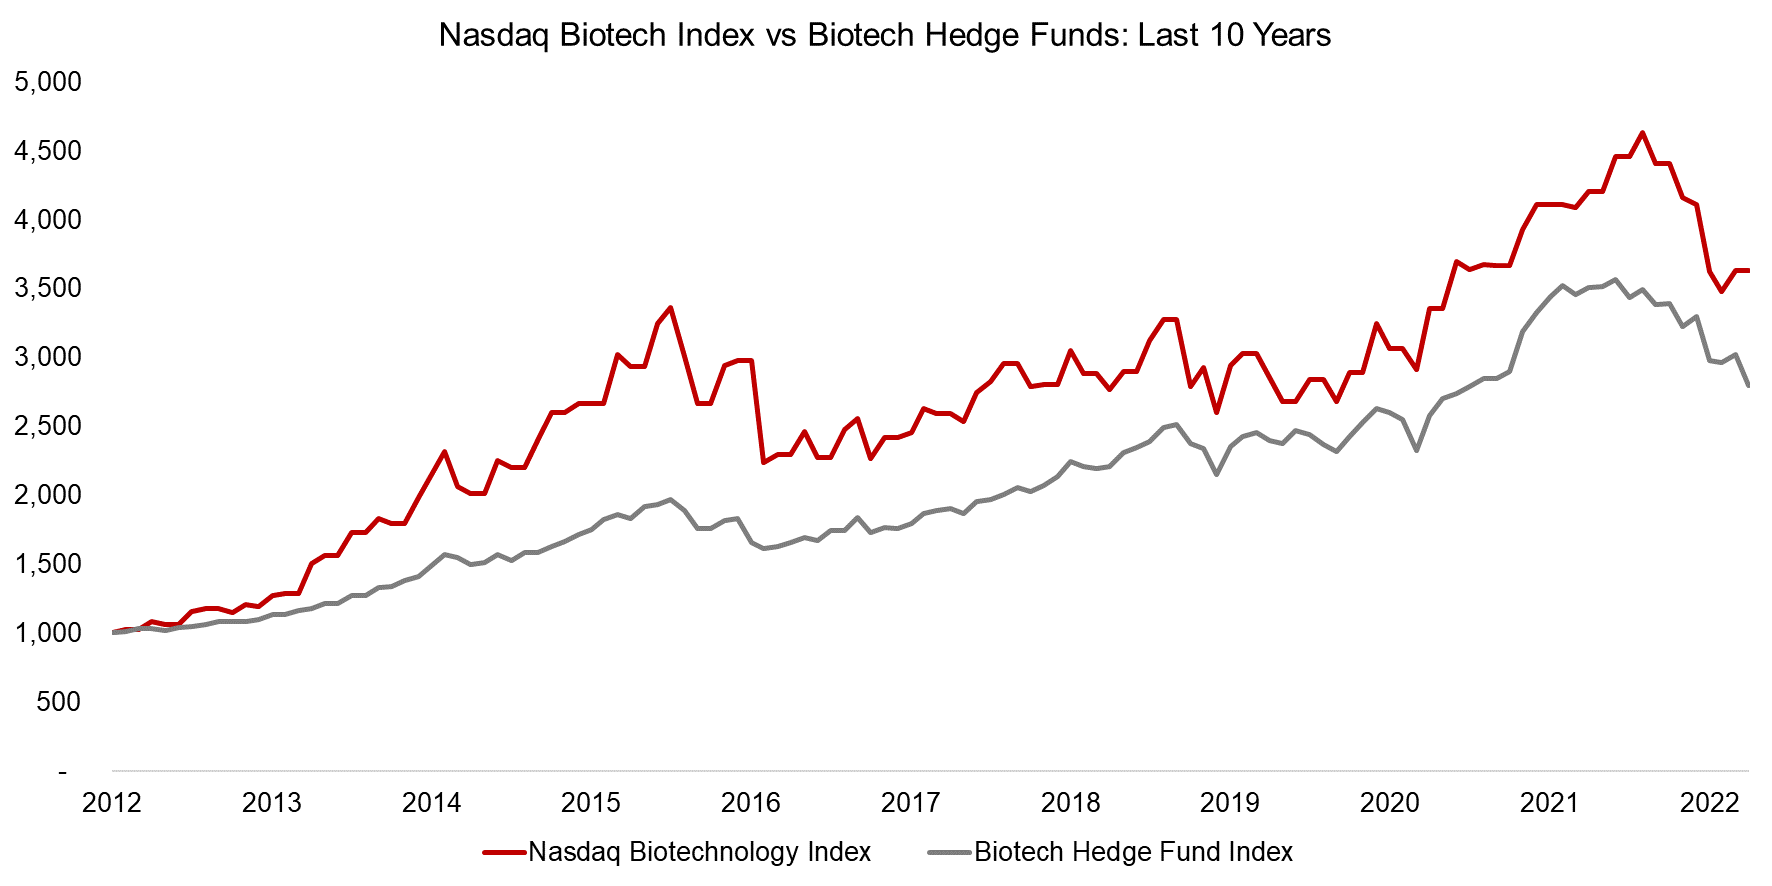 Nasdaq Biotech Index vs Biotech Hedge Funds Last 10 Years